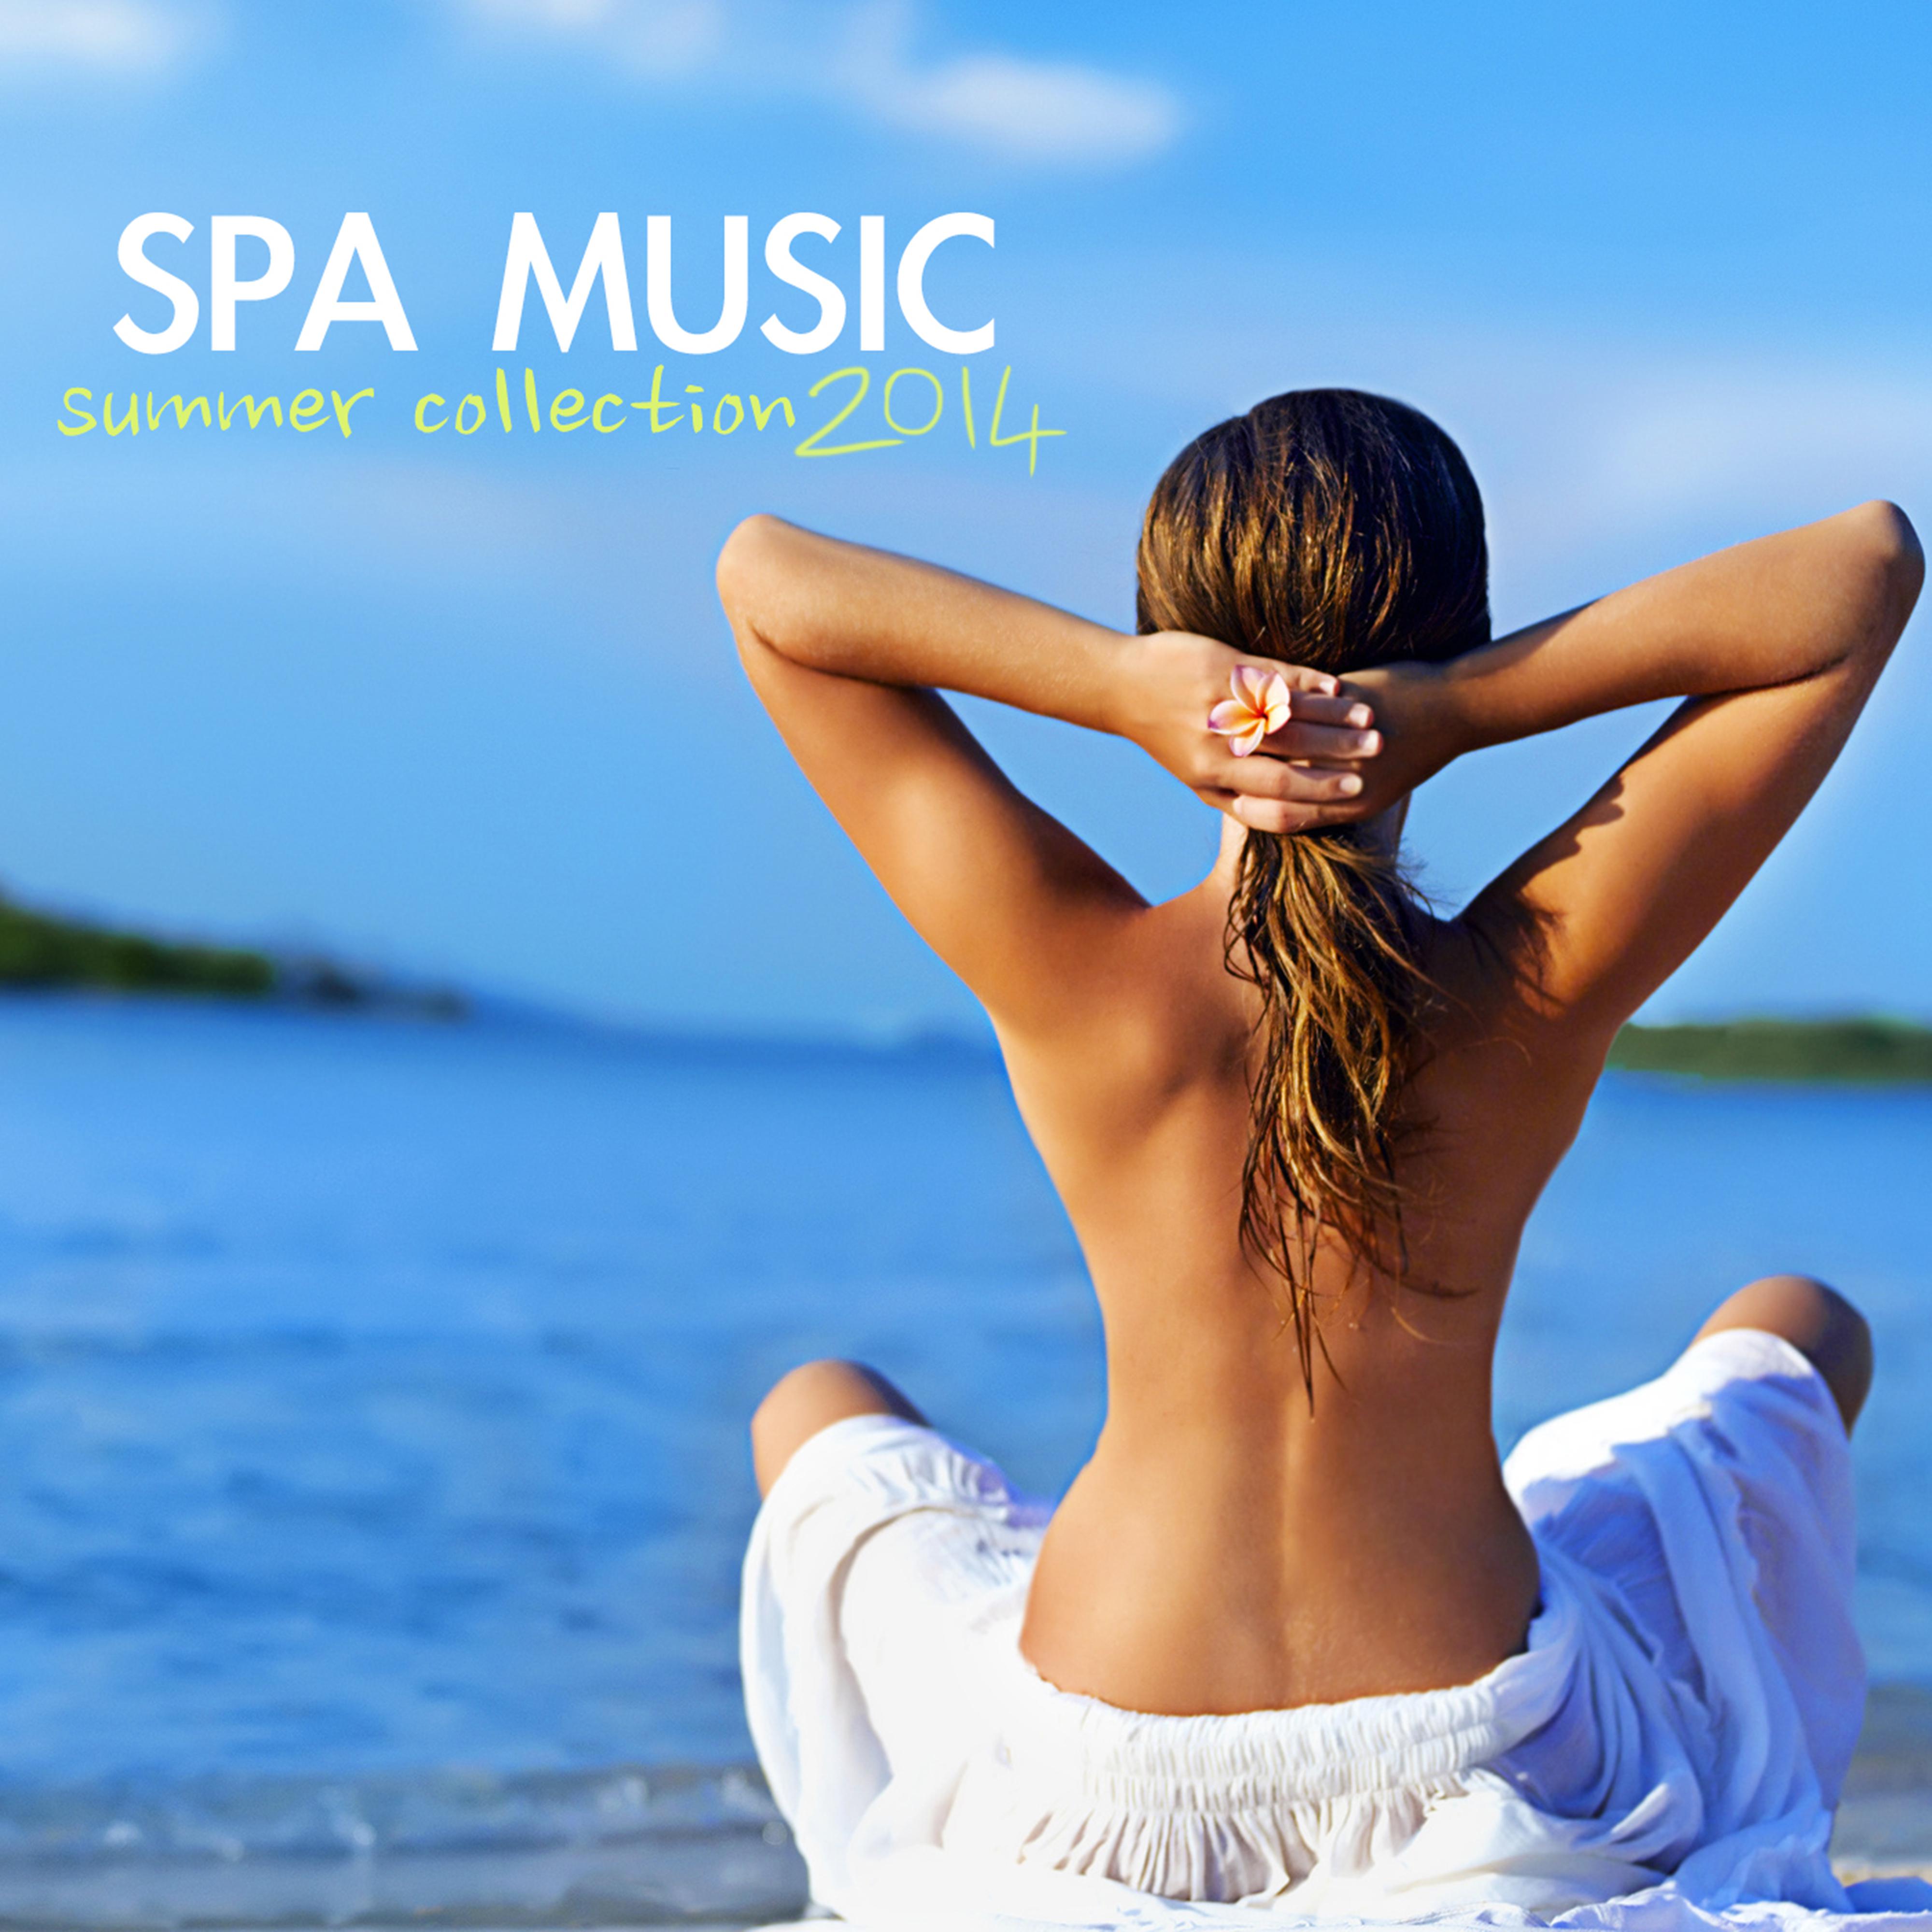 Spa Music Summer Collection 2014 - Yoga Meditation, Massage Music & Spa Music Relaxation